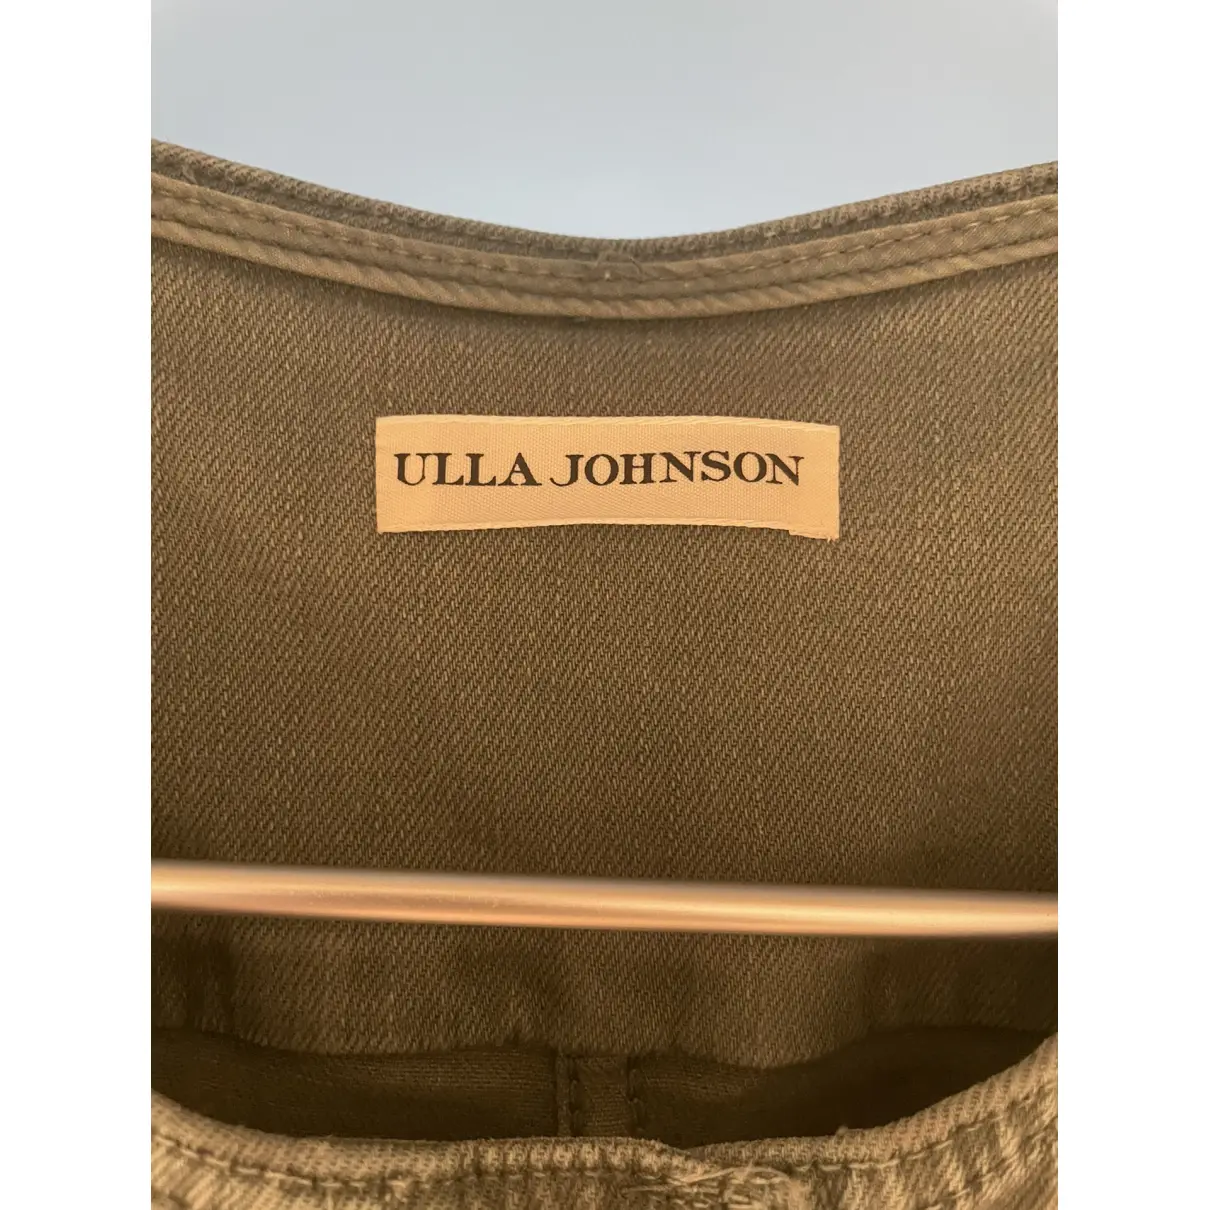 Buy Ulla Johnson Jumpsuit online